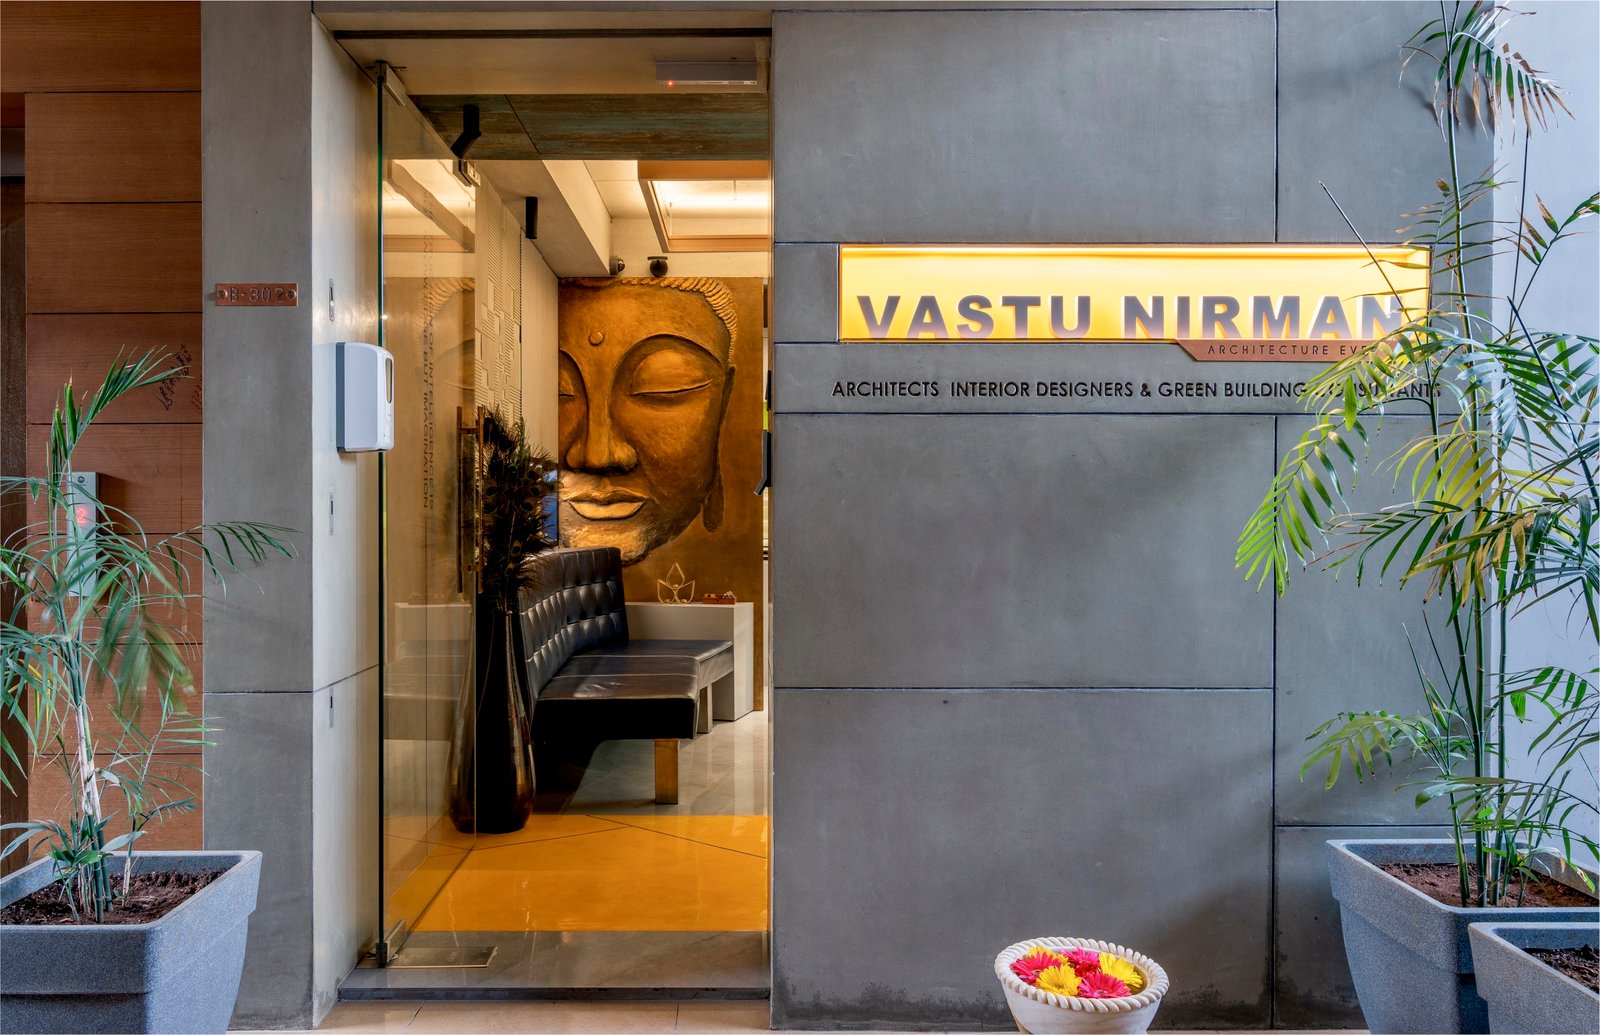 Vastu Nirman- Architects, Interior Designers & Green Building Consultants